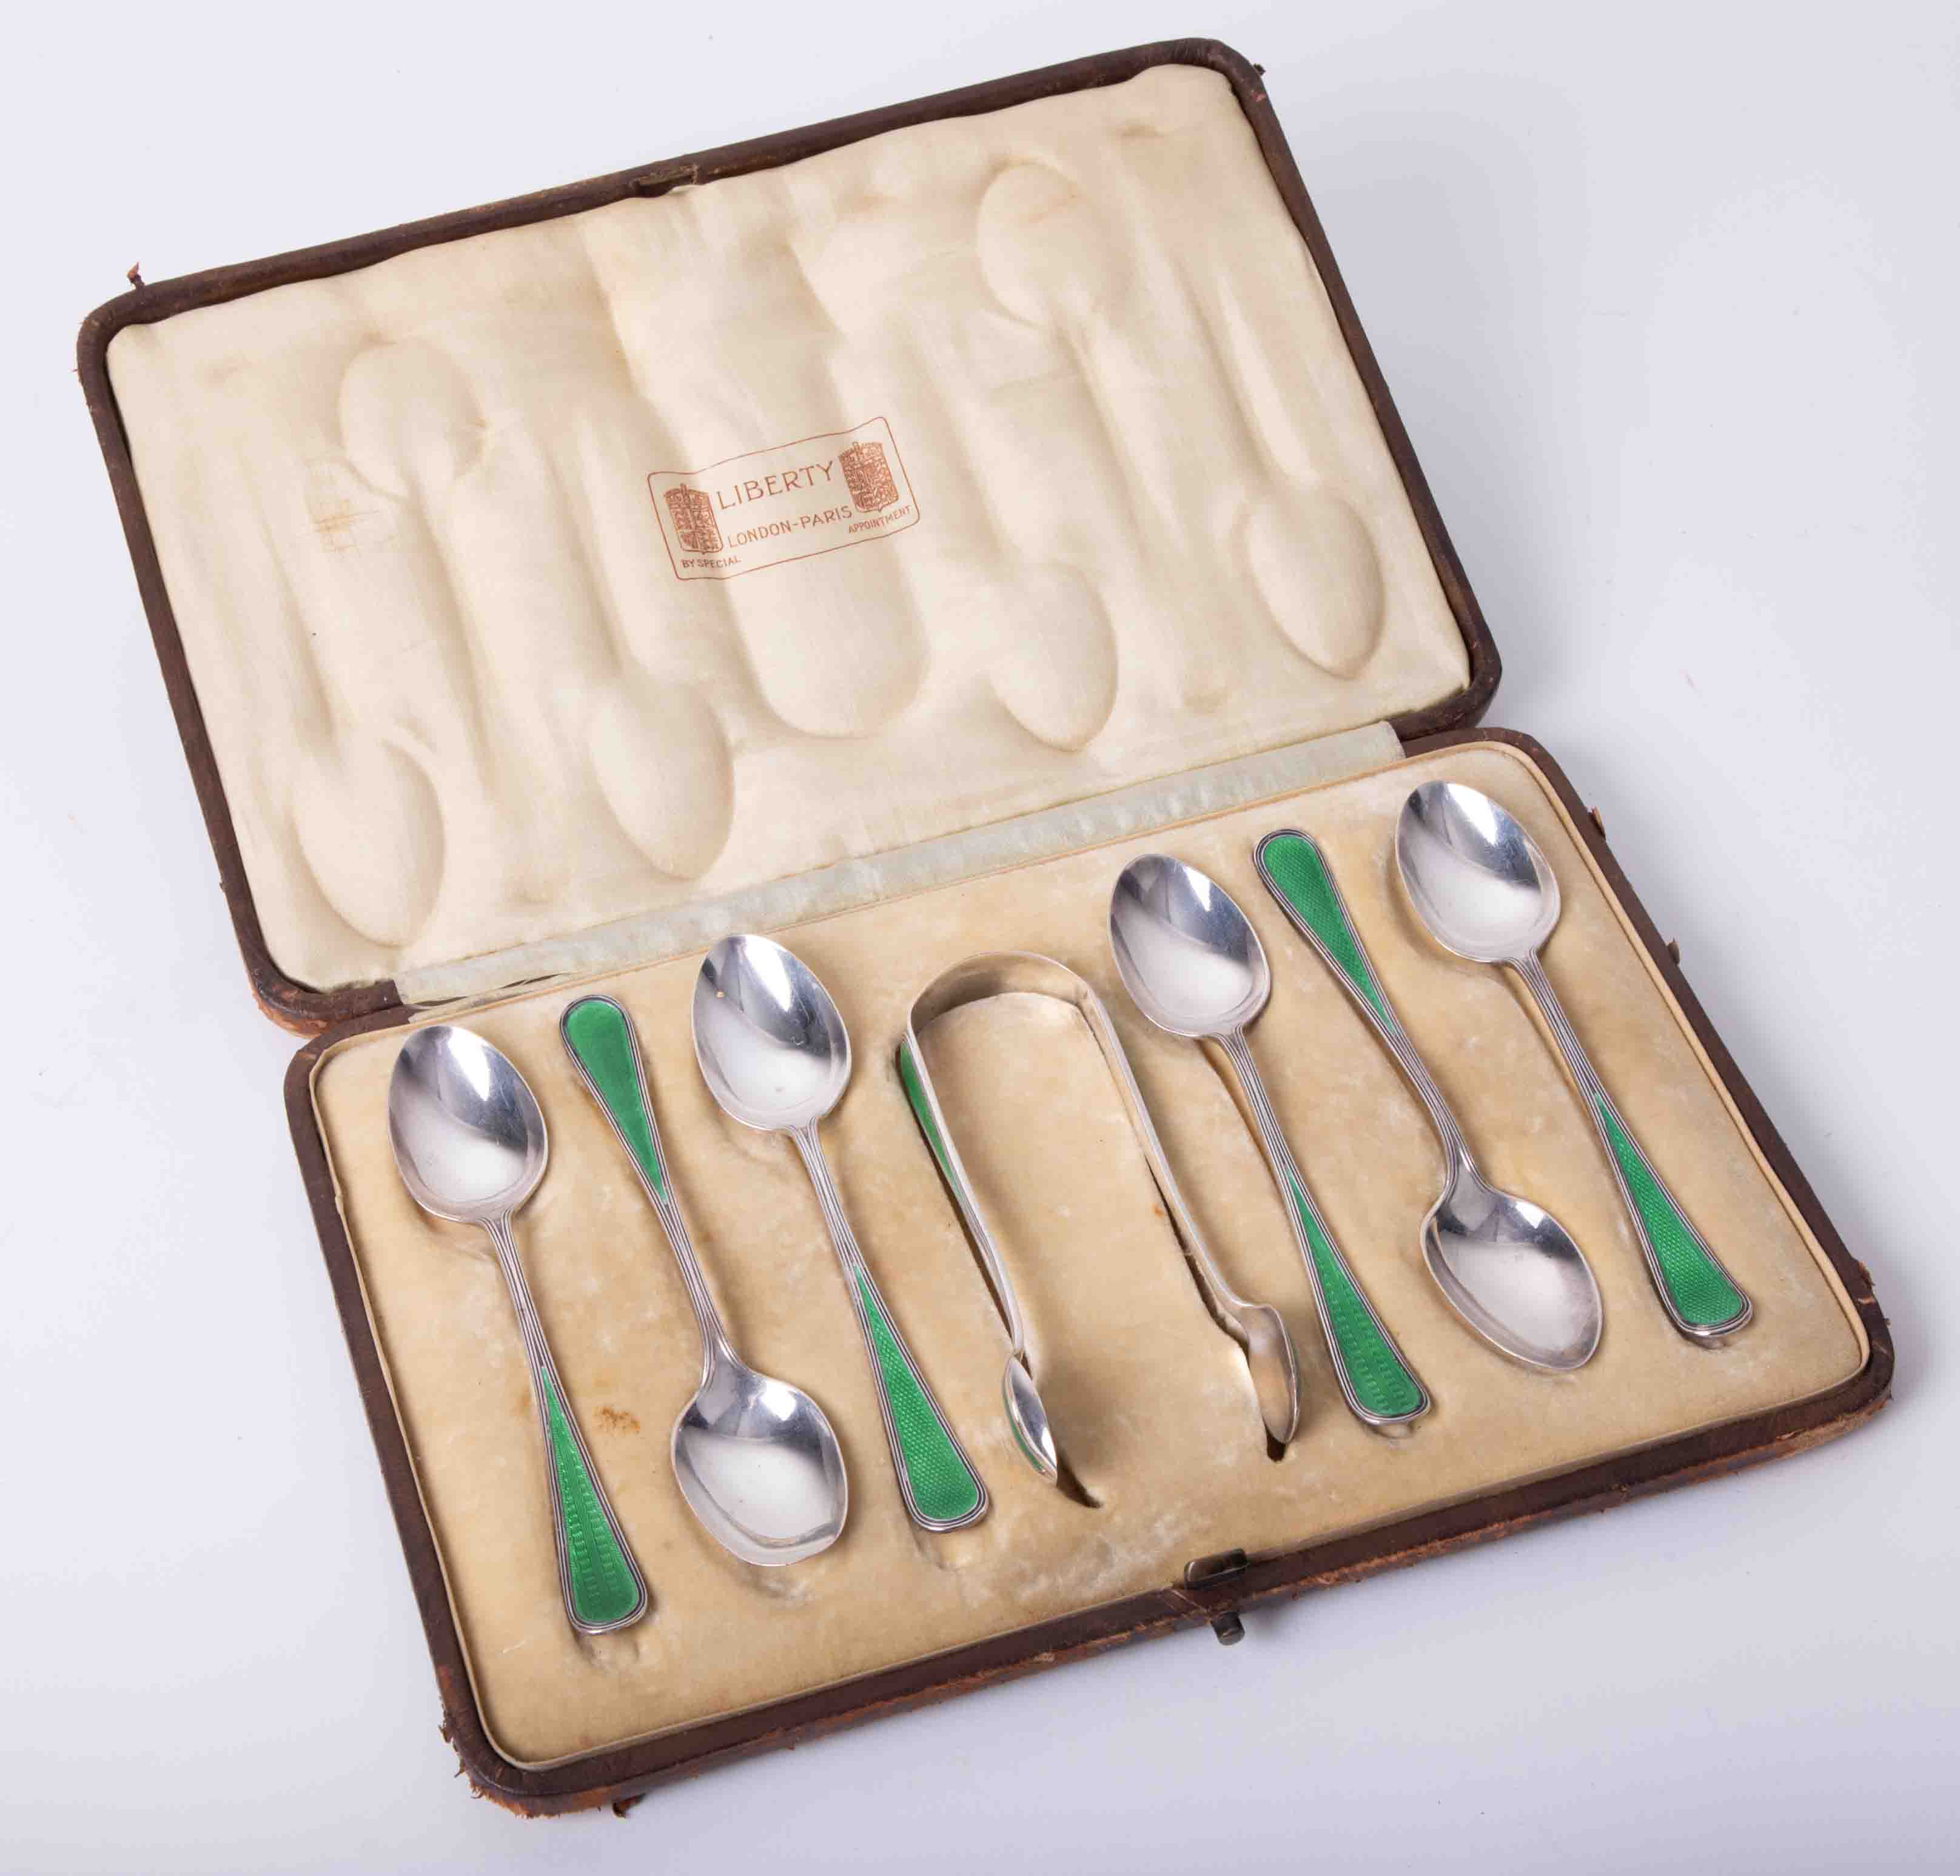 A boxed set of Liberty & Co enamel tea spoons and tongs, 7 piece.